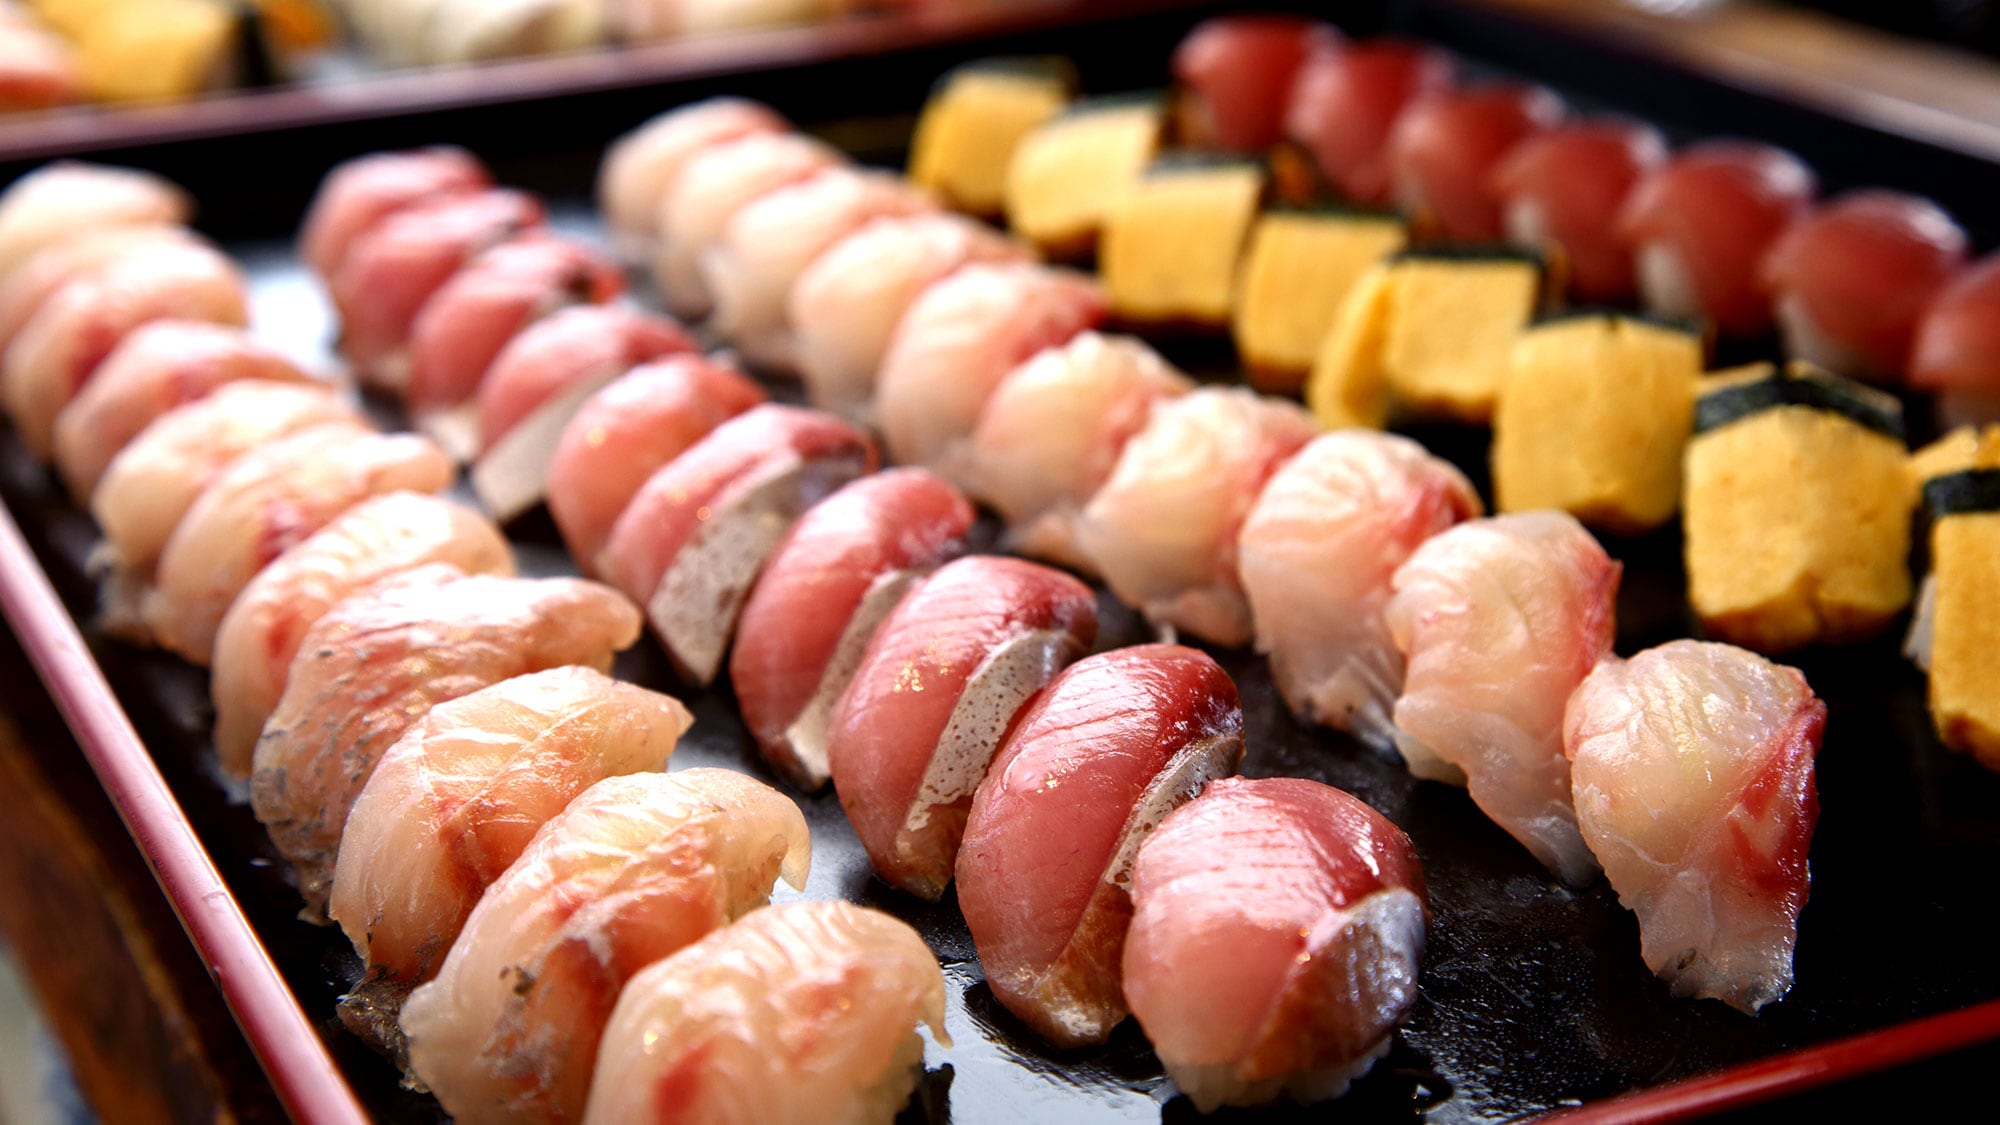 ■ Viking's popular menu Sushi